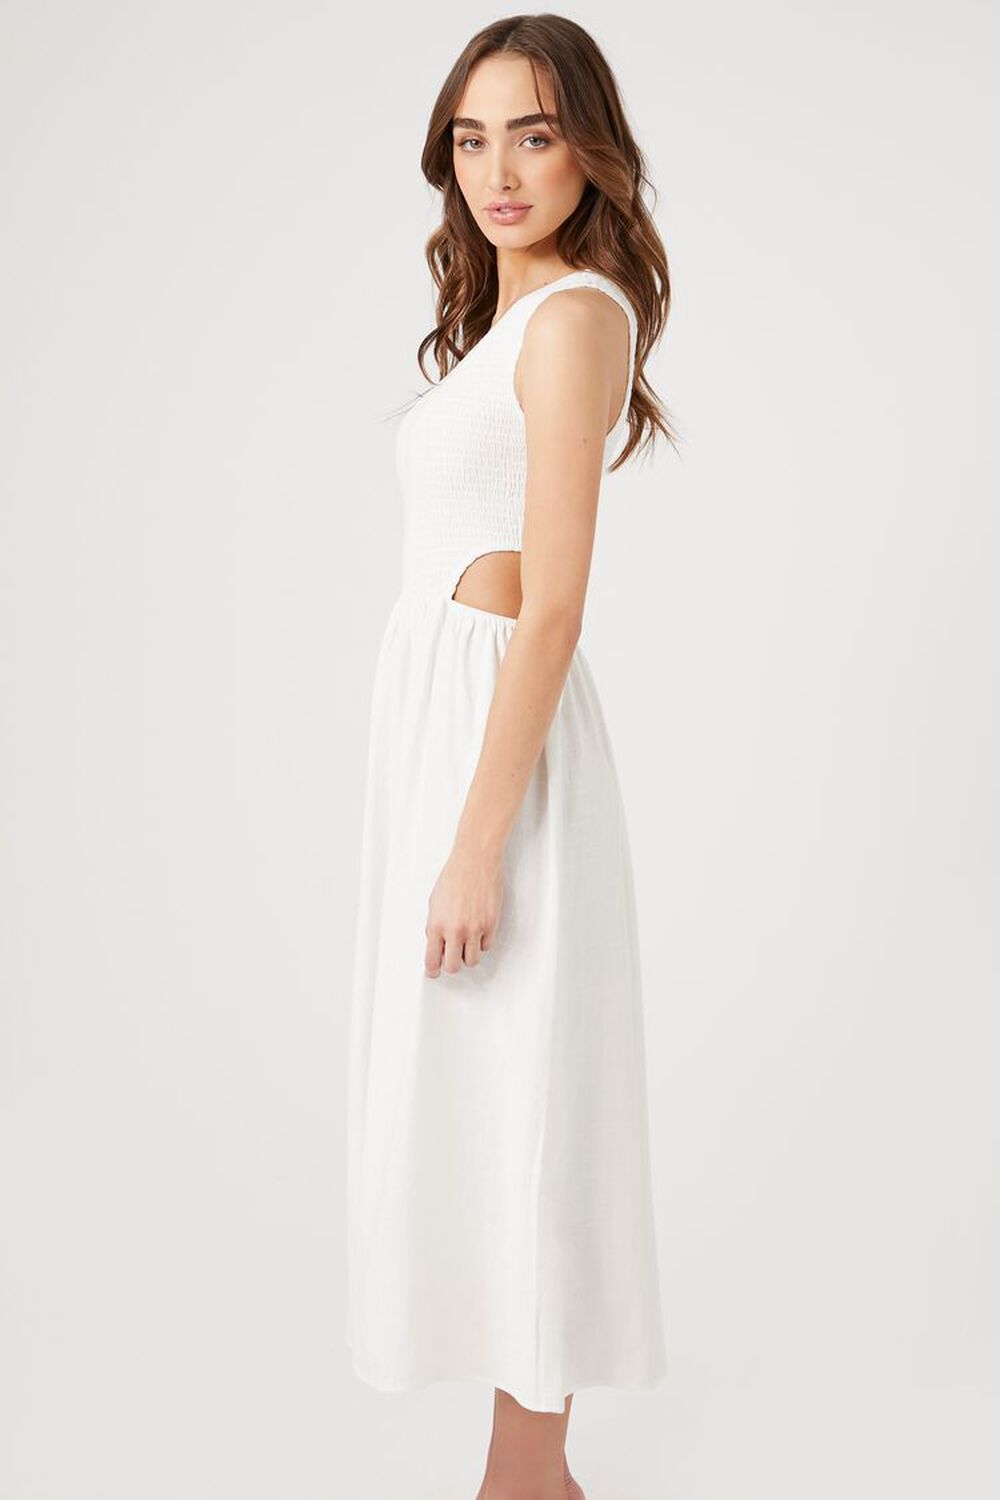 IVORY One-Shoulder Cutout Midi Dress, image 2